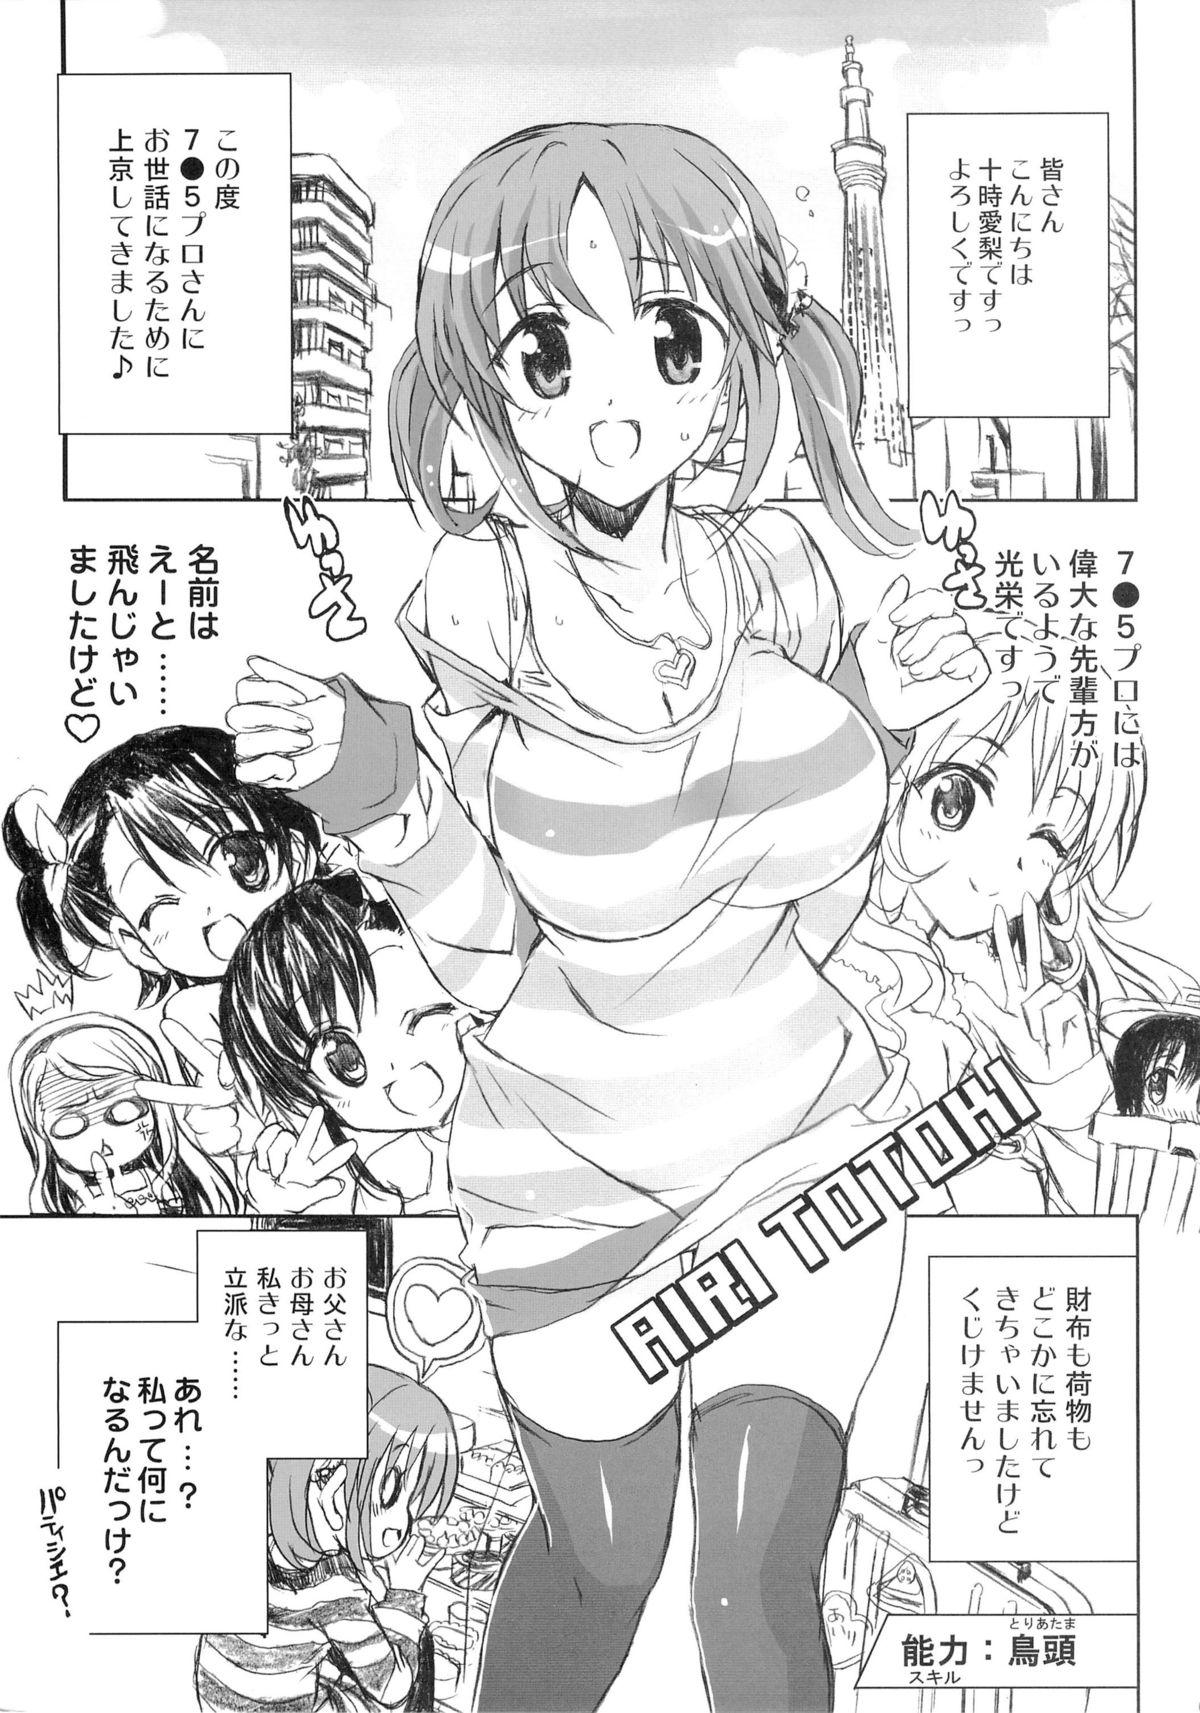 PASSION FRUITS GIRLS #1 "Totoki Airi" 3